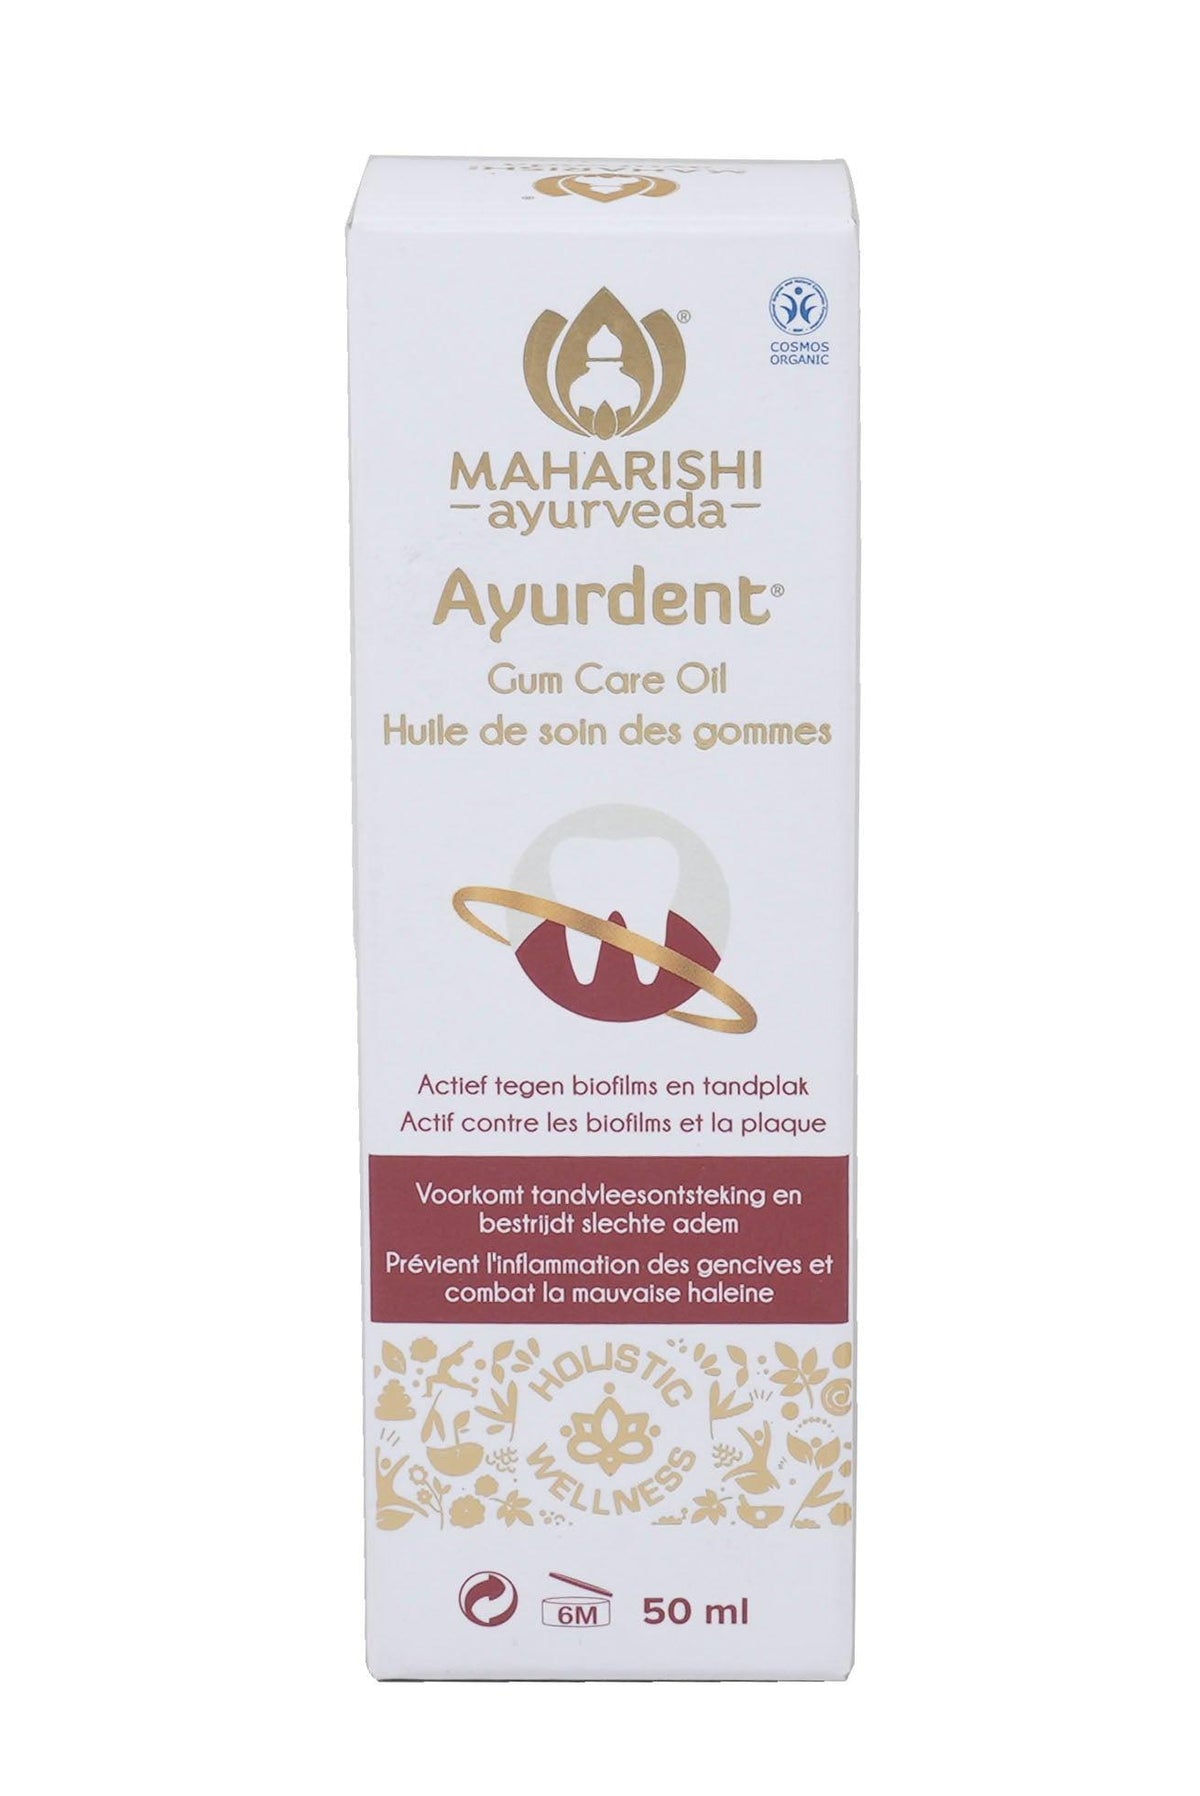 Ayurdent Gum Care Oil 50ml - Holy Sanity 